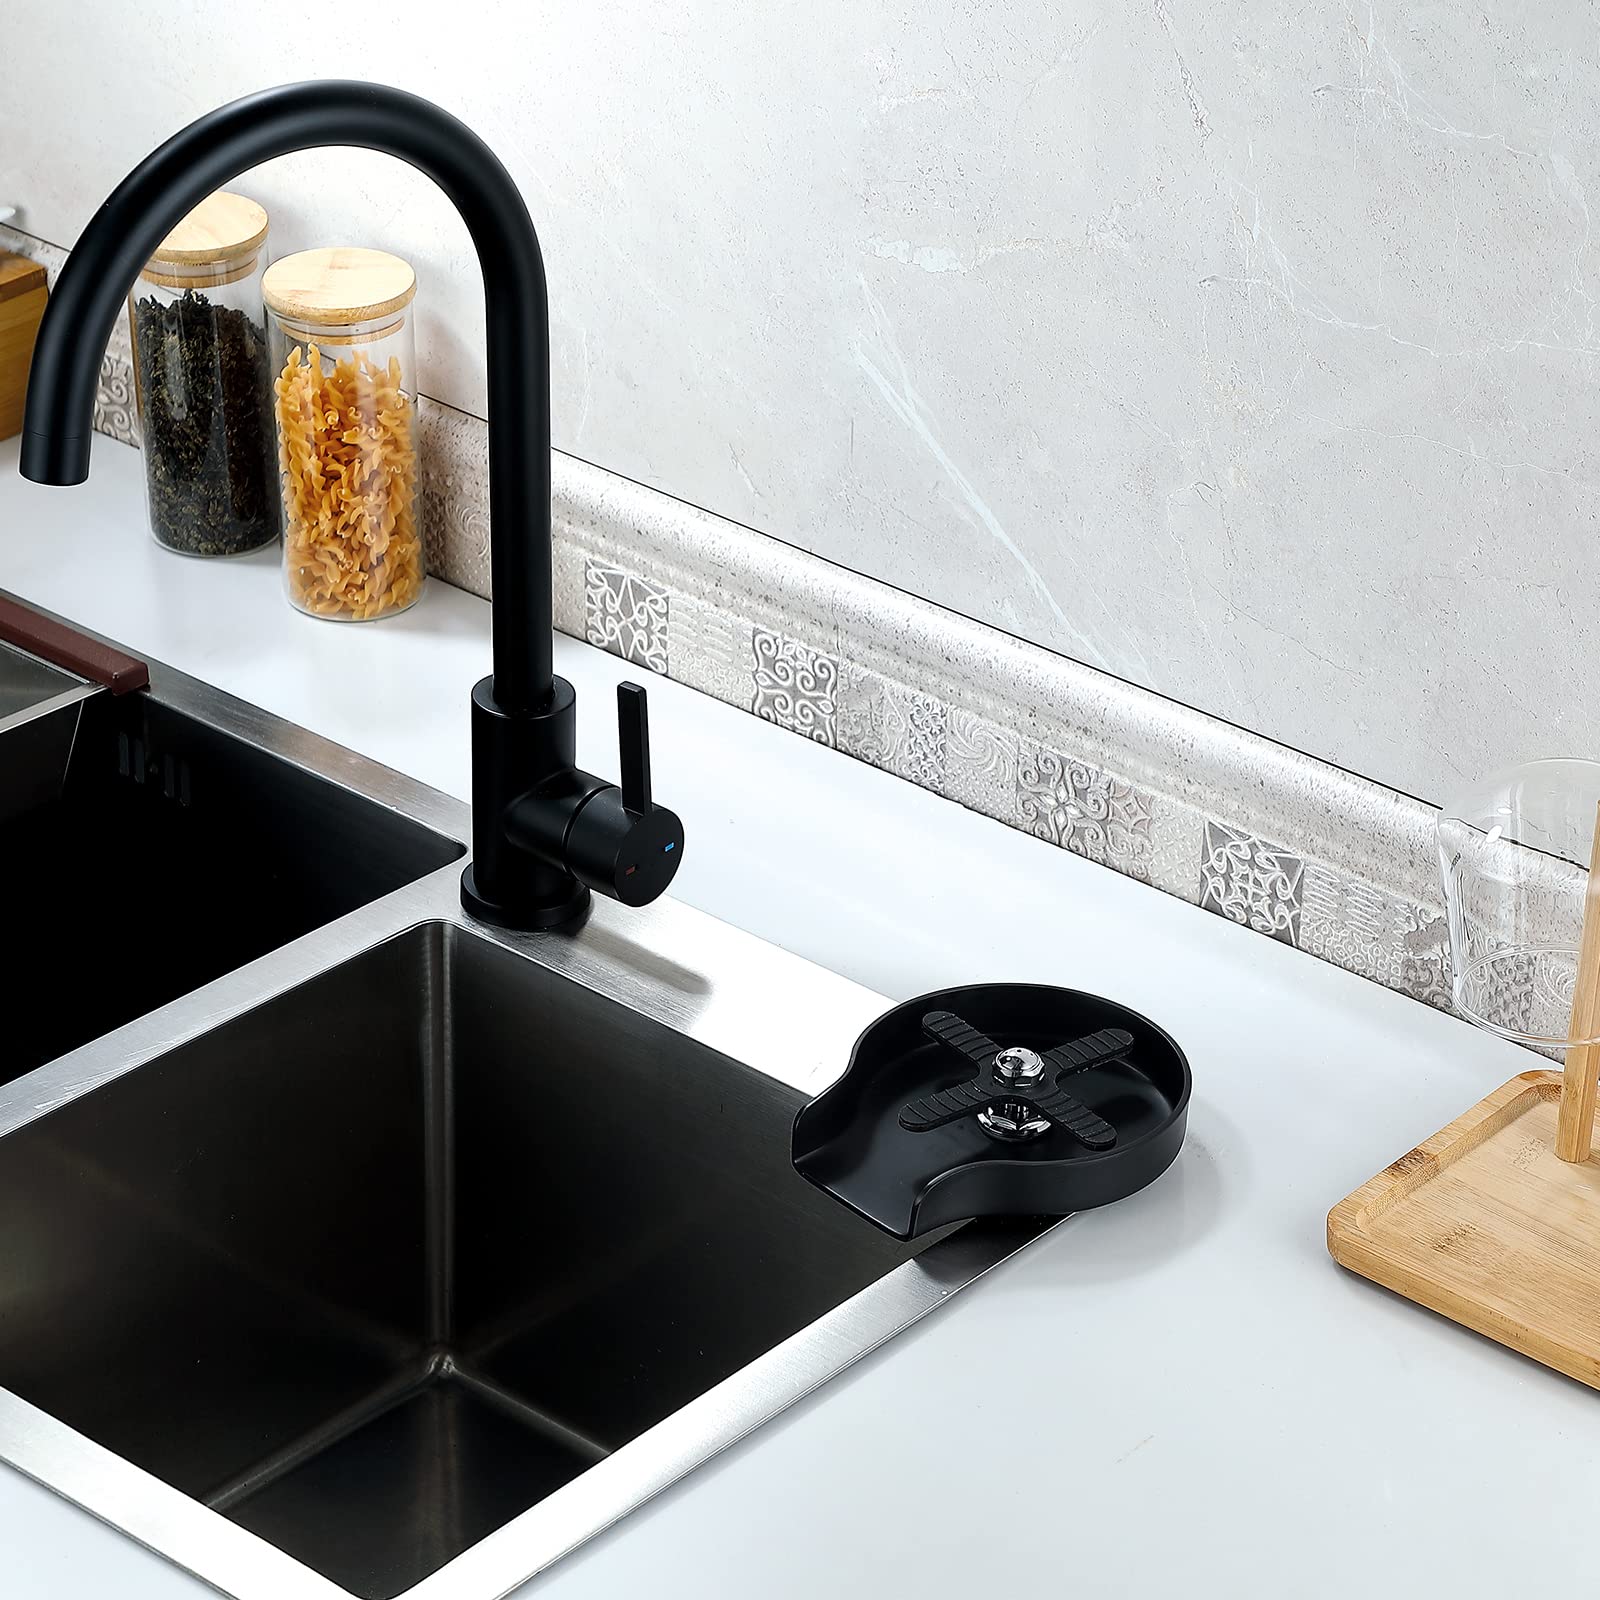 ARRISEA Metal Faucet Glass Rinser for Kitchen Sink, Matte Black Cup Rinser, Kitchen Sink Accessories, Bottle Washer